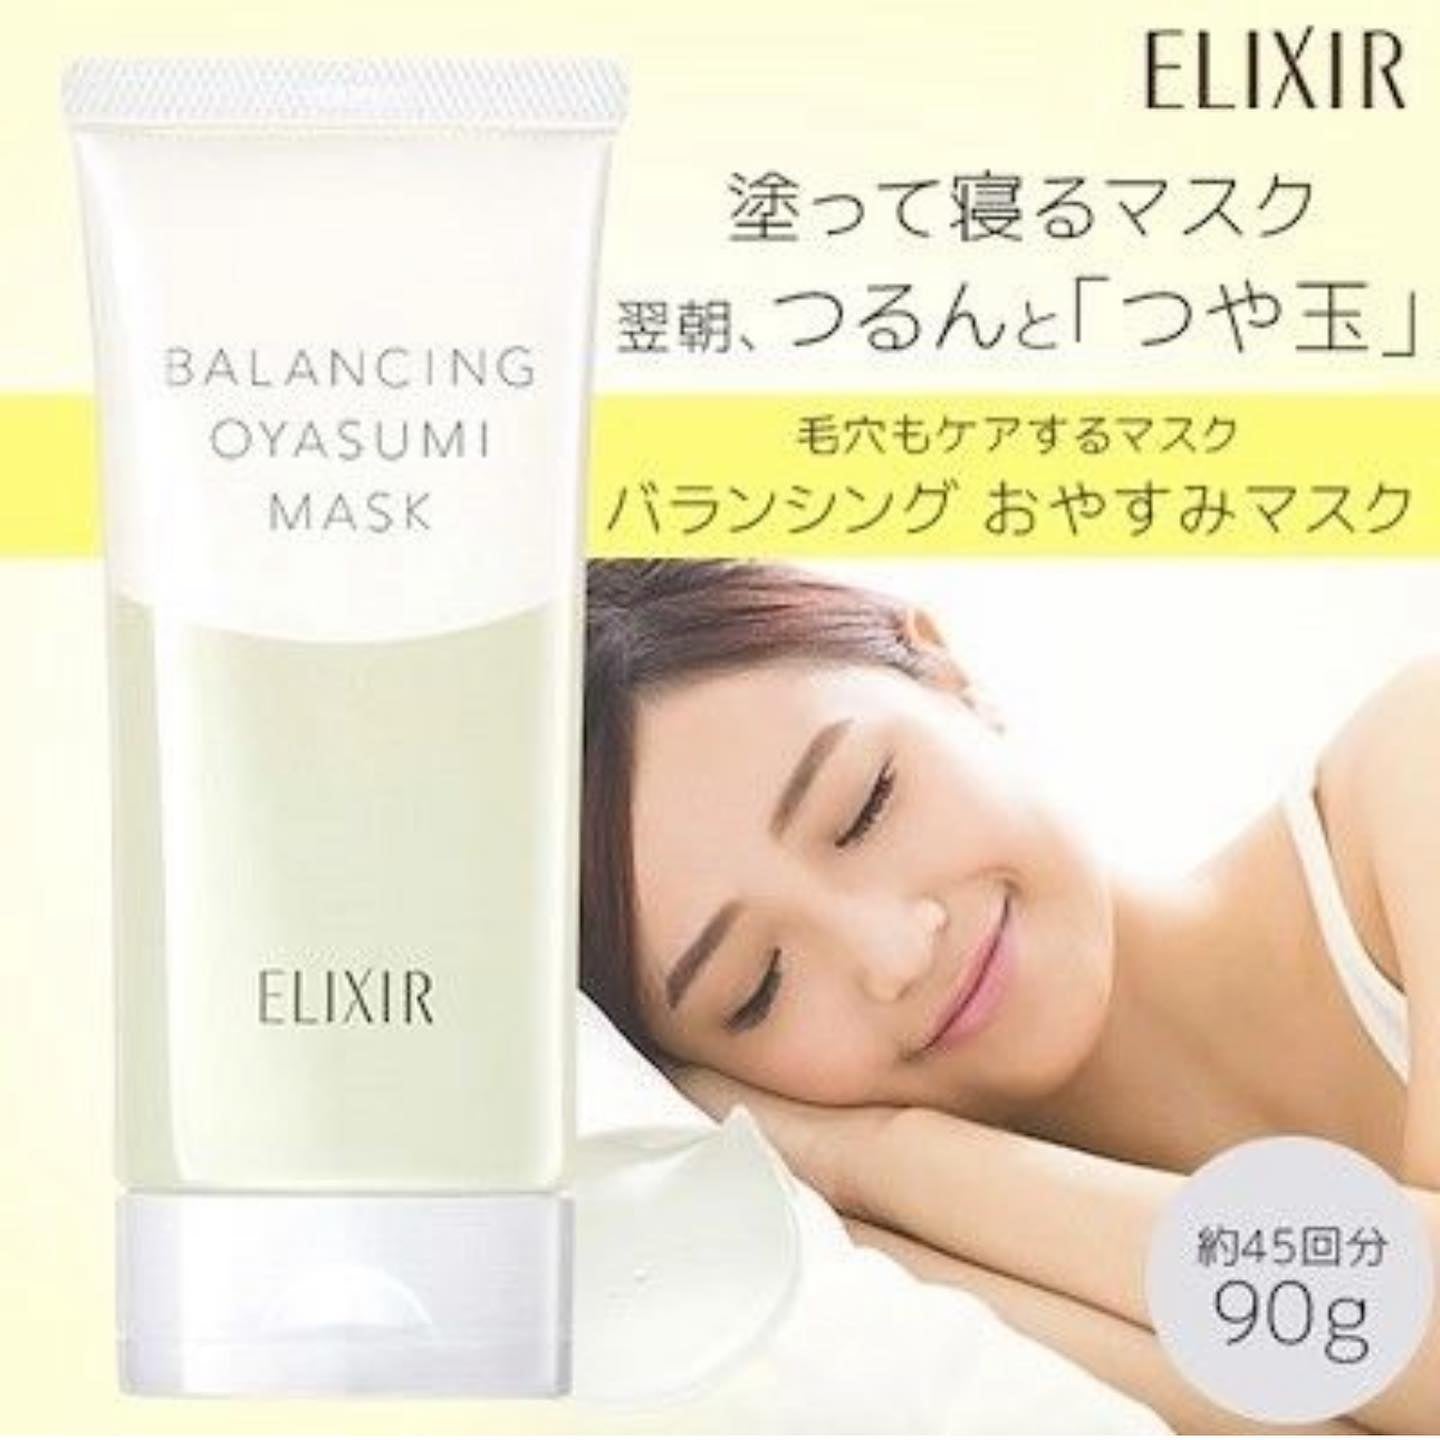 Elixir 將肌膚導向看不見毛孔的”水玉光” 「ELIXIR REFLET BALANCING OYASUMI MASK」凝凍水油平衡睡眠面膜|改善毛孔粗大|補充膠原蛋白|保濕|收毛孔